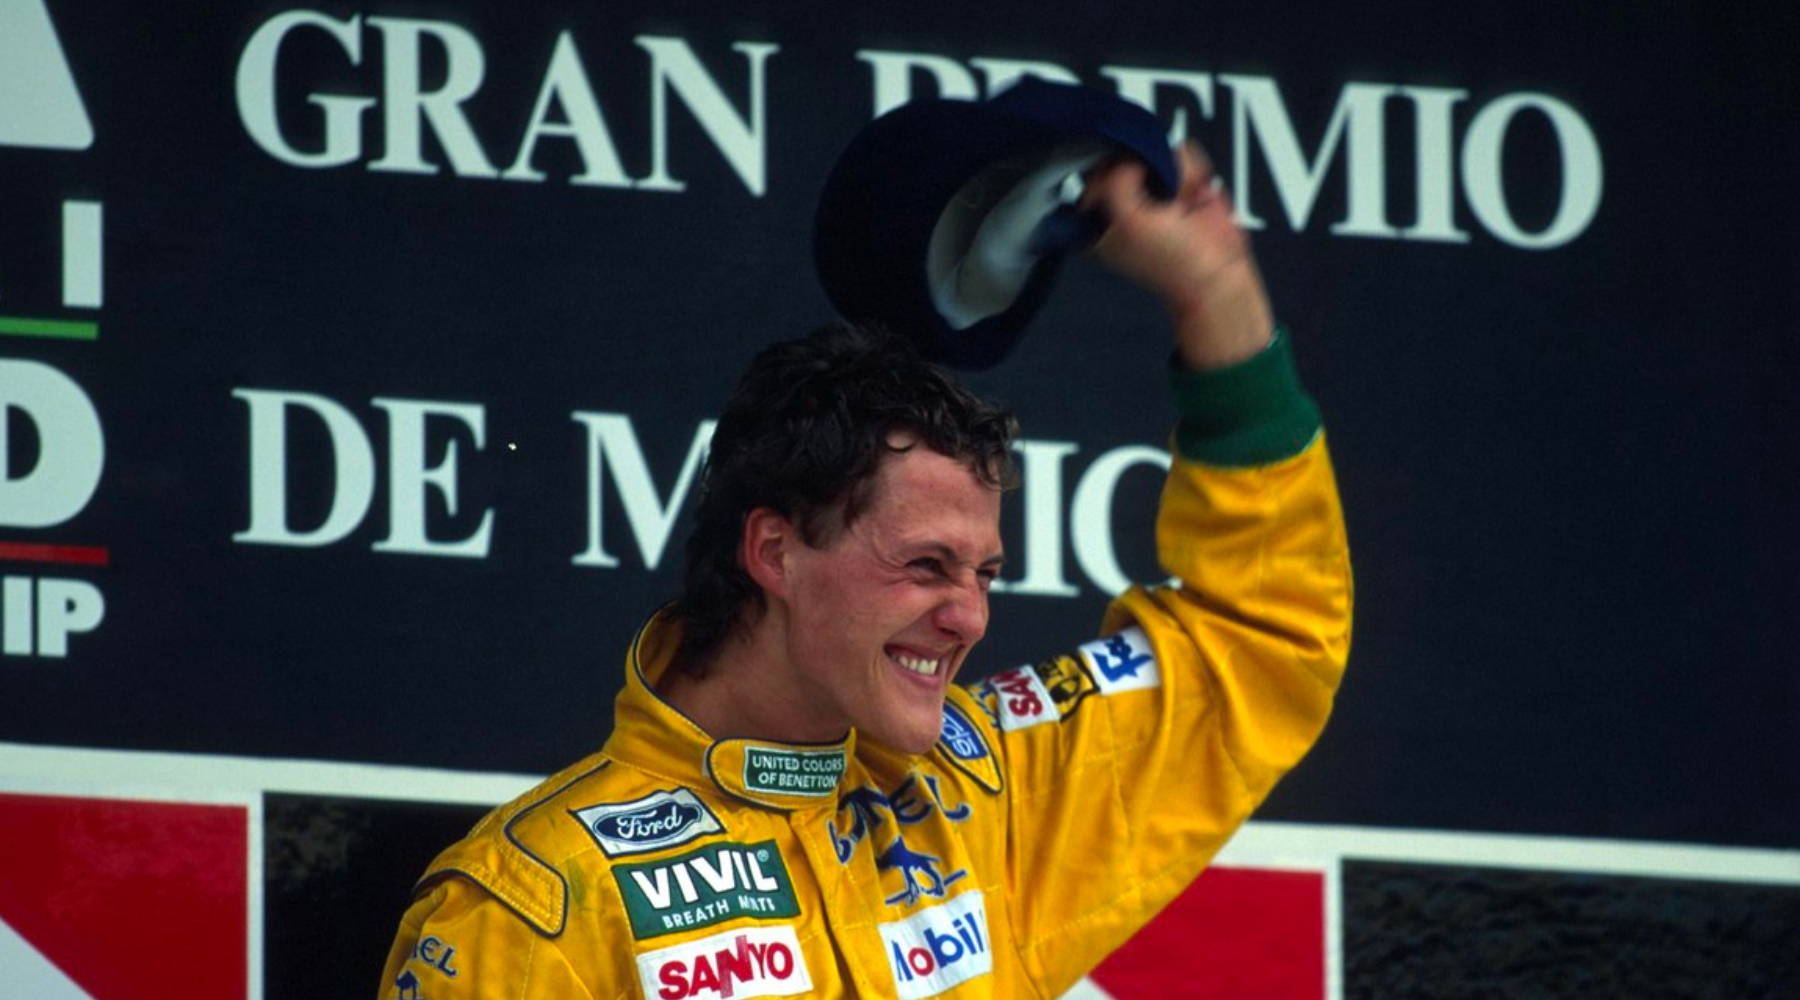   Cortesía: Michael Schumacher Official Website.  